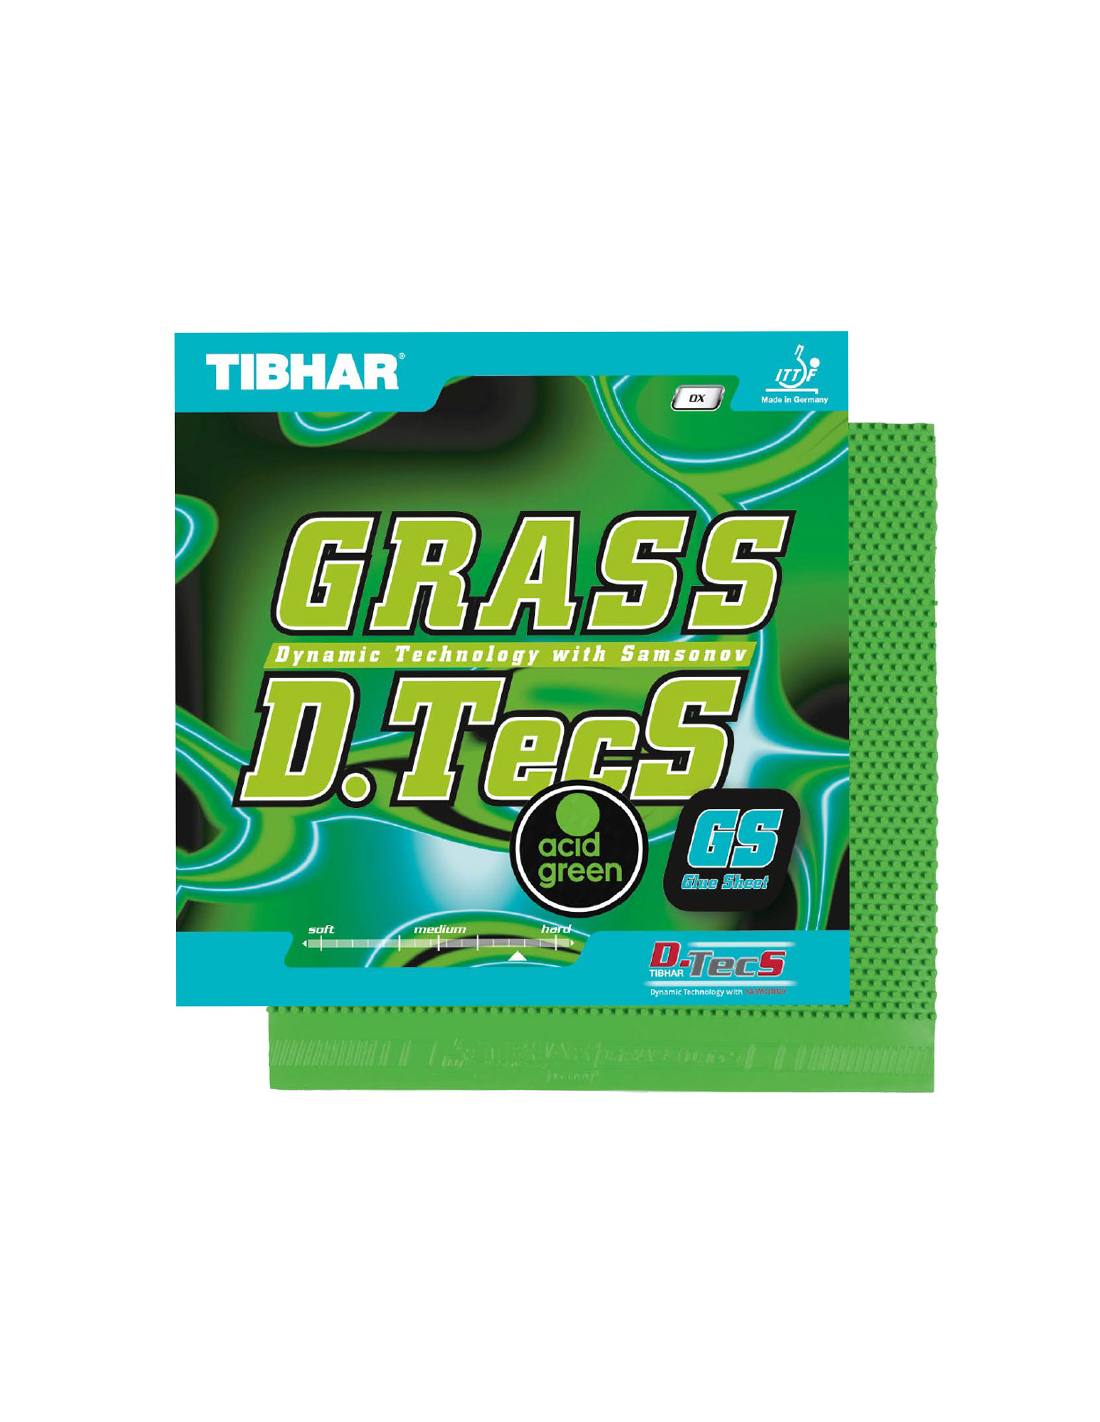 TIBHAR Grass D.Tecs GS ACID GREEN 